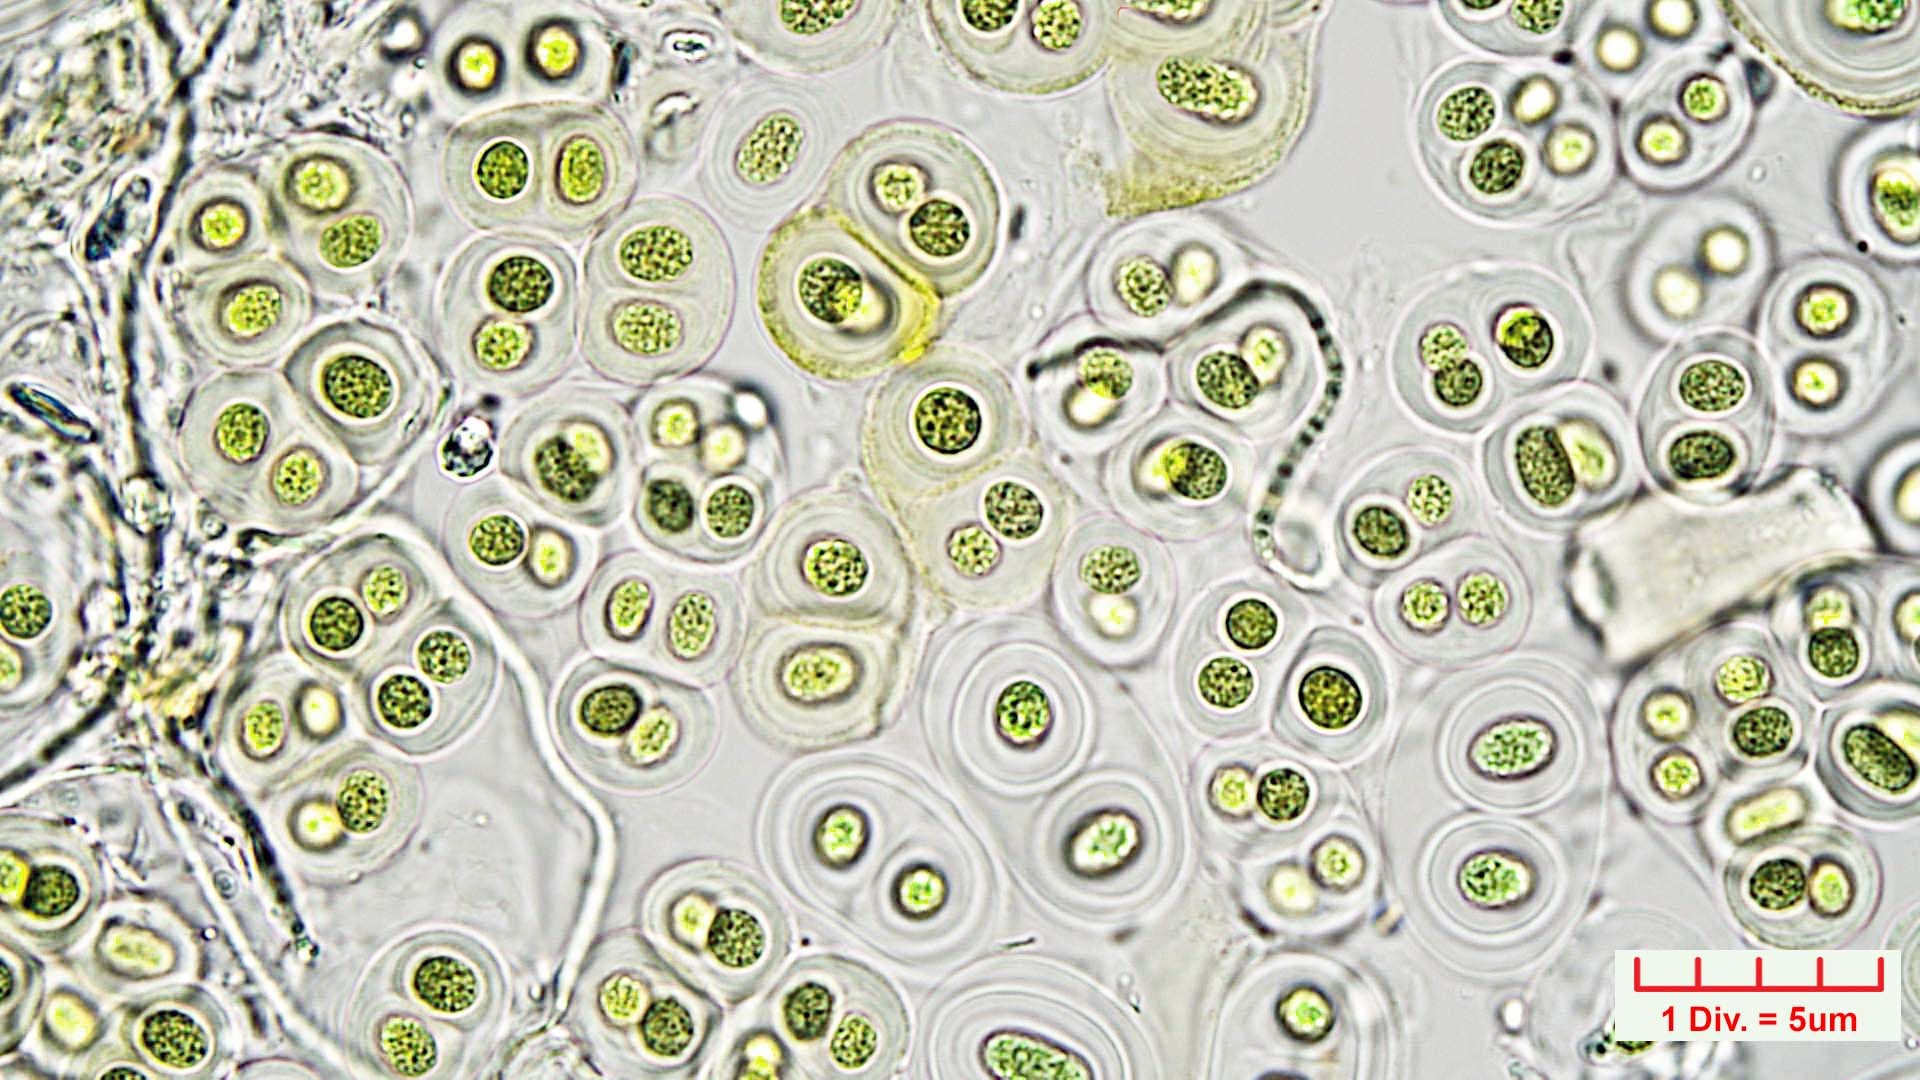 ././Cyanobacteria/Chroococcales/Aphanothecaceae/Gloeothece/rupestris/gloeothece-rupestris-15.jpg